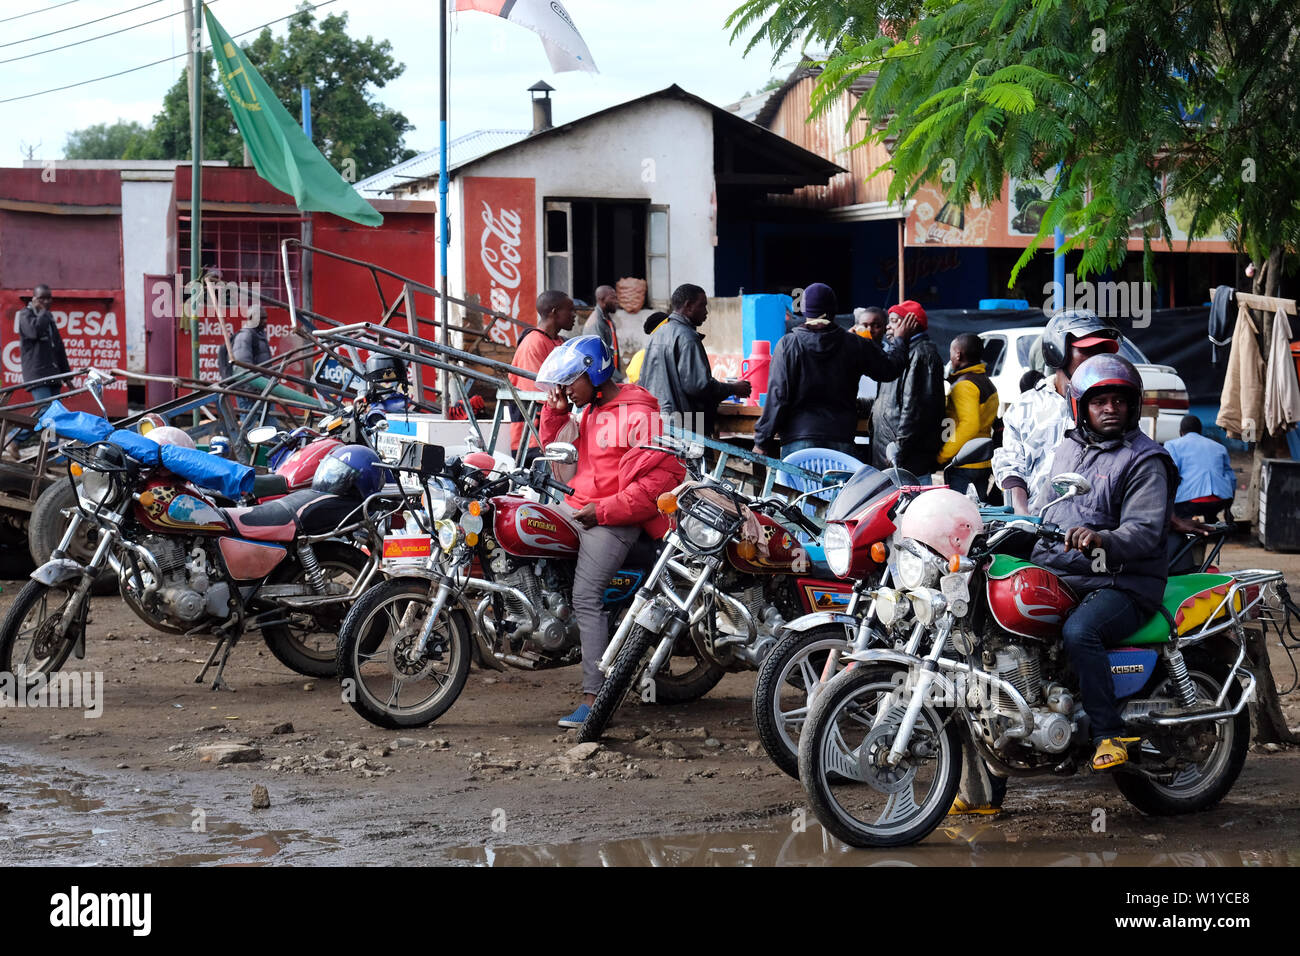 Motorcycle taxis wait for customers in the streets of Mbeya, Tanzania, Africa.    ---   Motorradtaxis warten auf Kundschaft in den Straßen von Mbeya, Tansania. Stock Photo